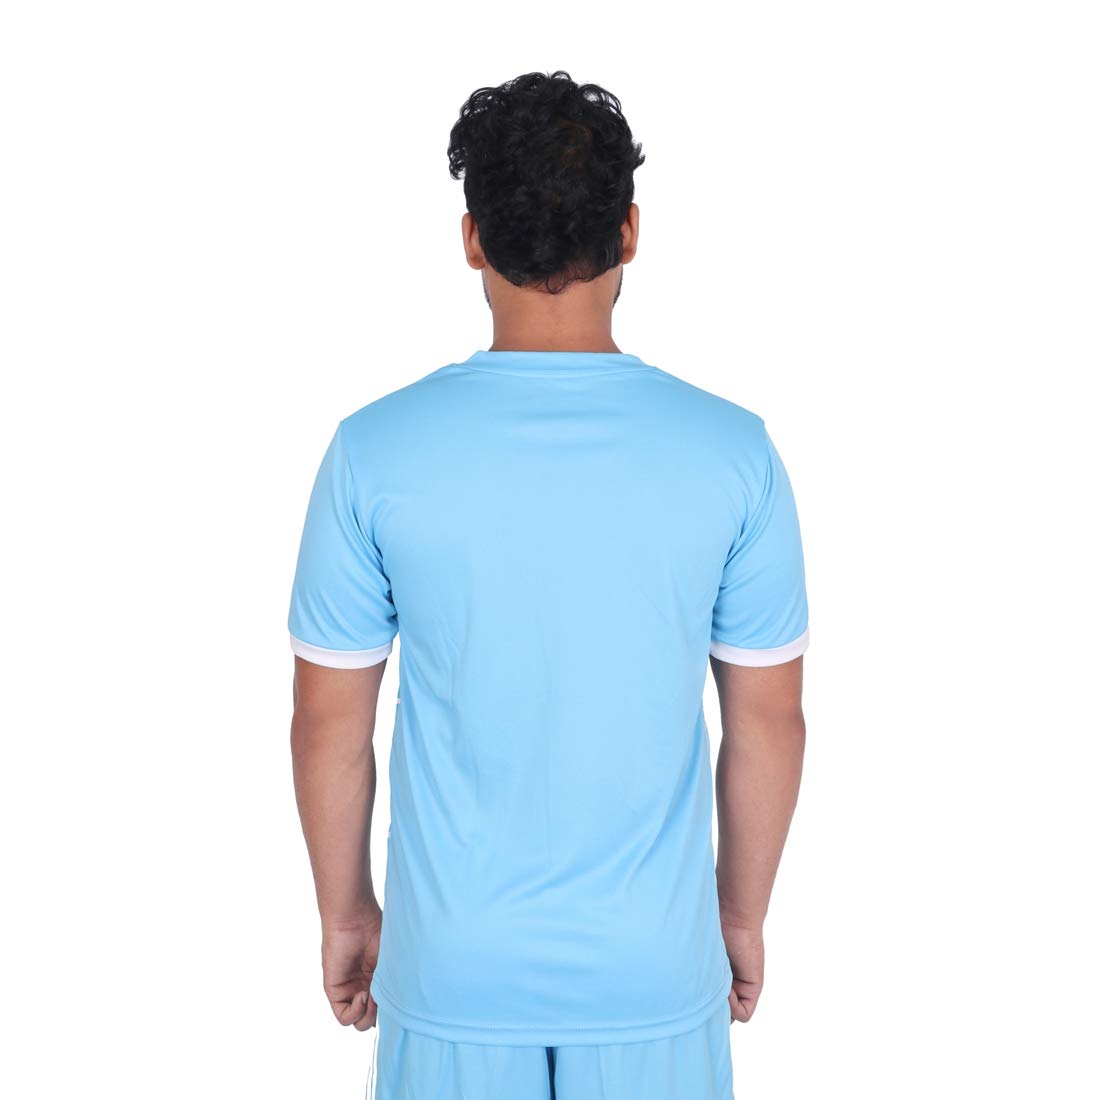 Vector X Football Set (T-Shirt & Short) VFS-ARGENTINA (Blue-White) - Best Price online Prokicksports.com